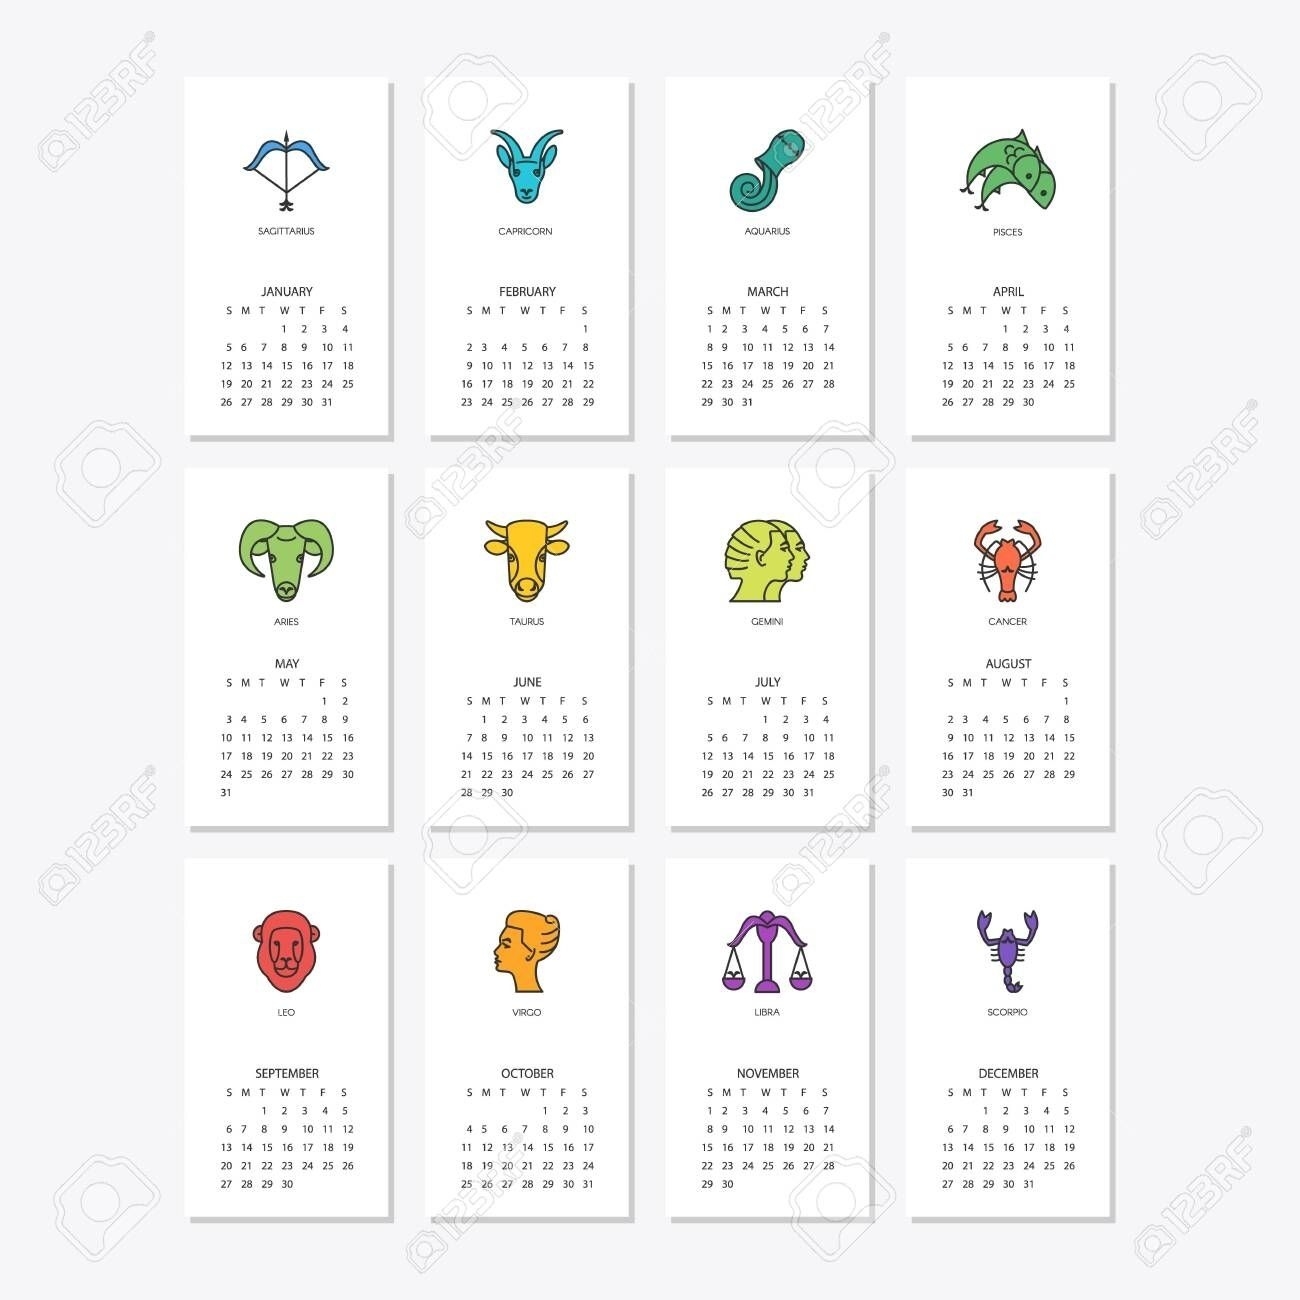 Zodiac Calendar Dates And Signs | Zodiac Signs Calendar New Zodiac Calendar Dates